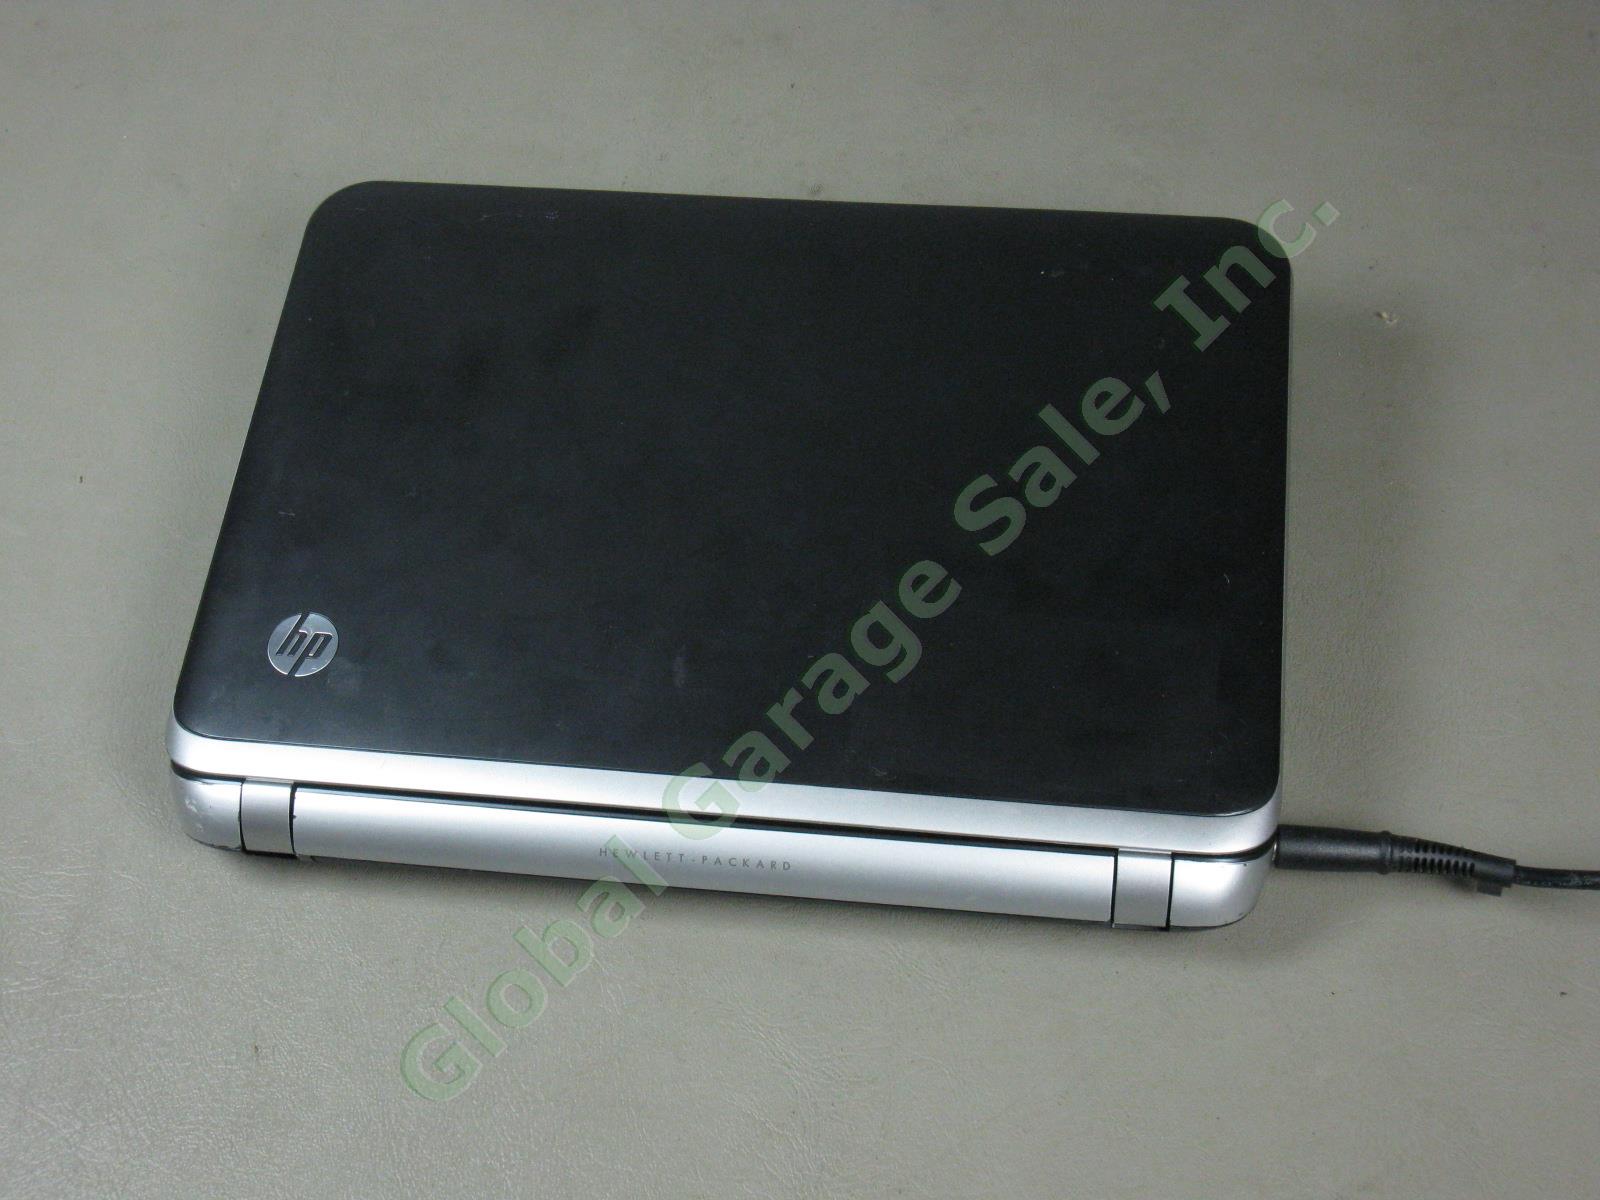 HP 3115m 11.6" Notebook Laptop Computer AMD 1.65GHz 4GB 320GB Windows 7 Ult NR! 3